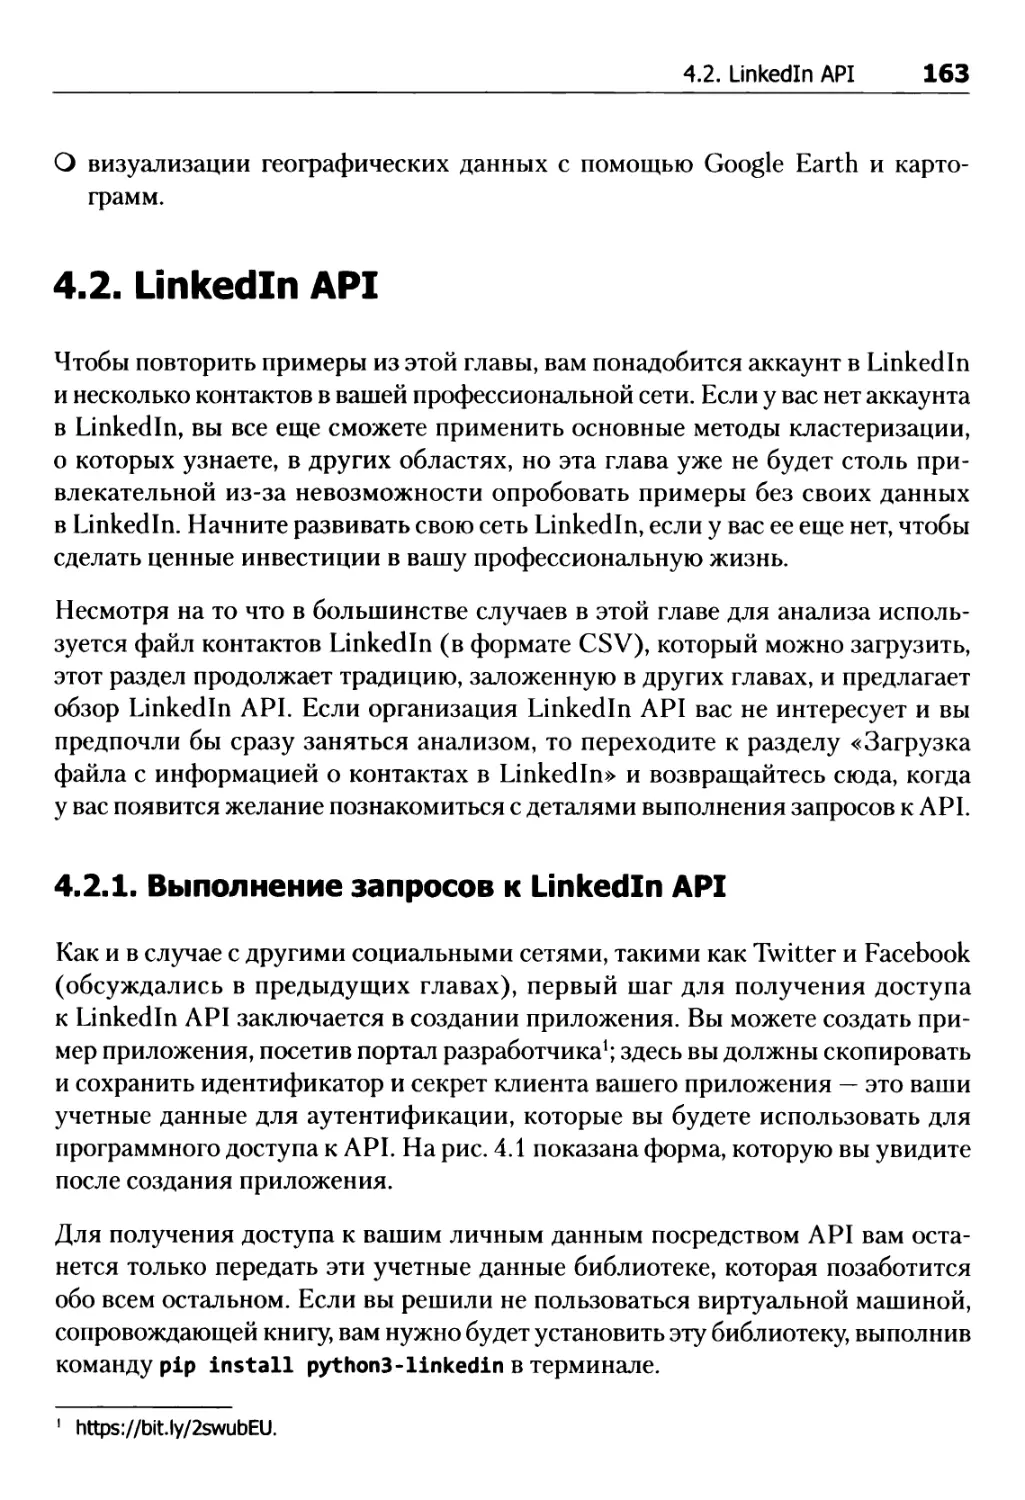 4.2. LinkedIn API
4.2.1. Выполнение запросов к LinkedIn API